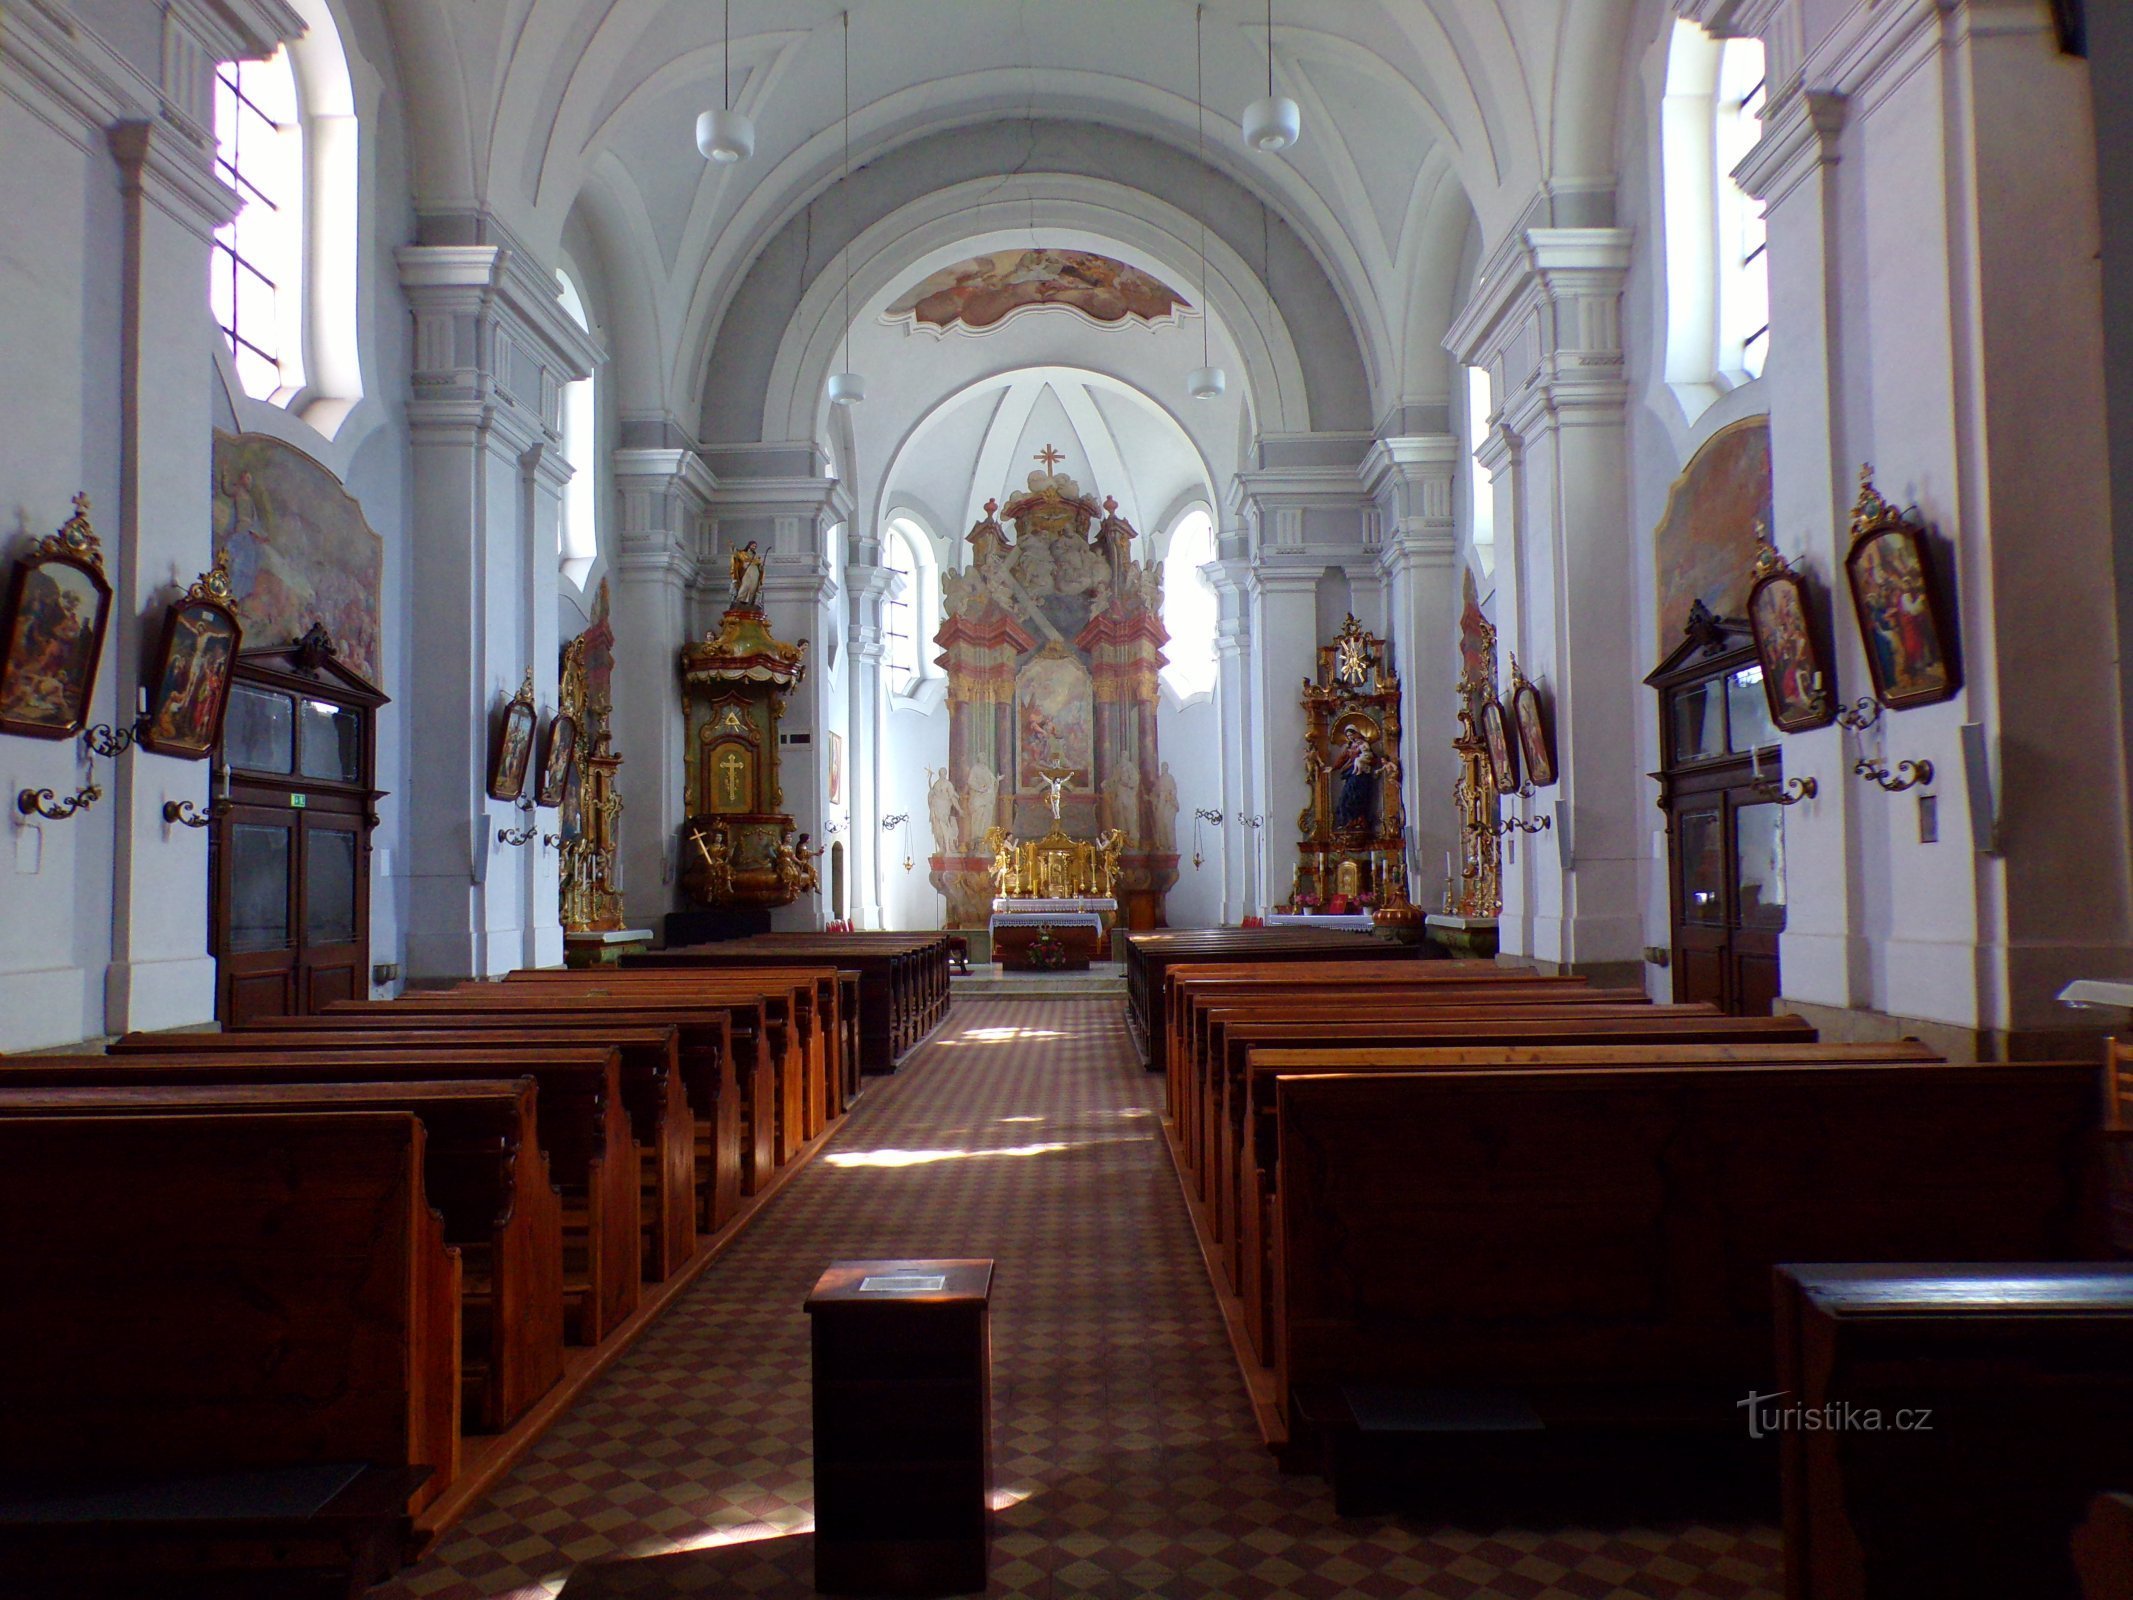 Cerkev sv. Andreja apostola (Třebechovice pod Orebem, 1.9.2022. XNUMX. XNUMX)